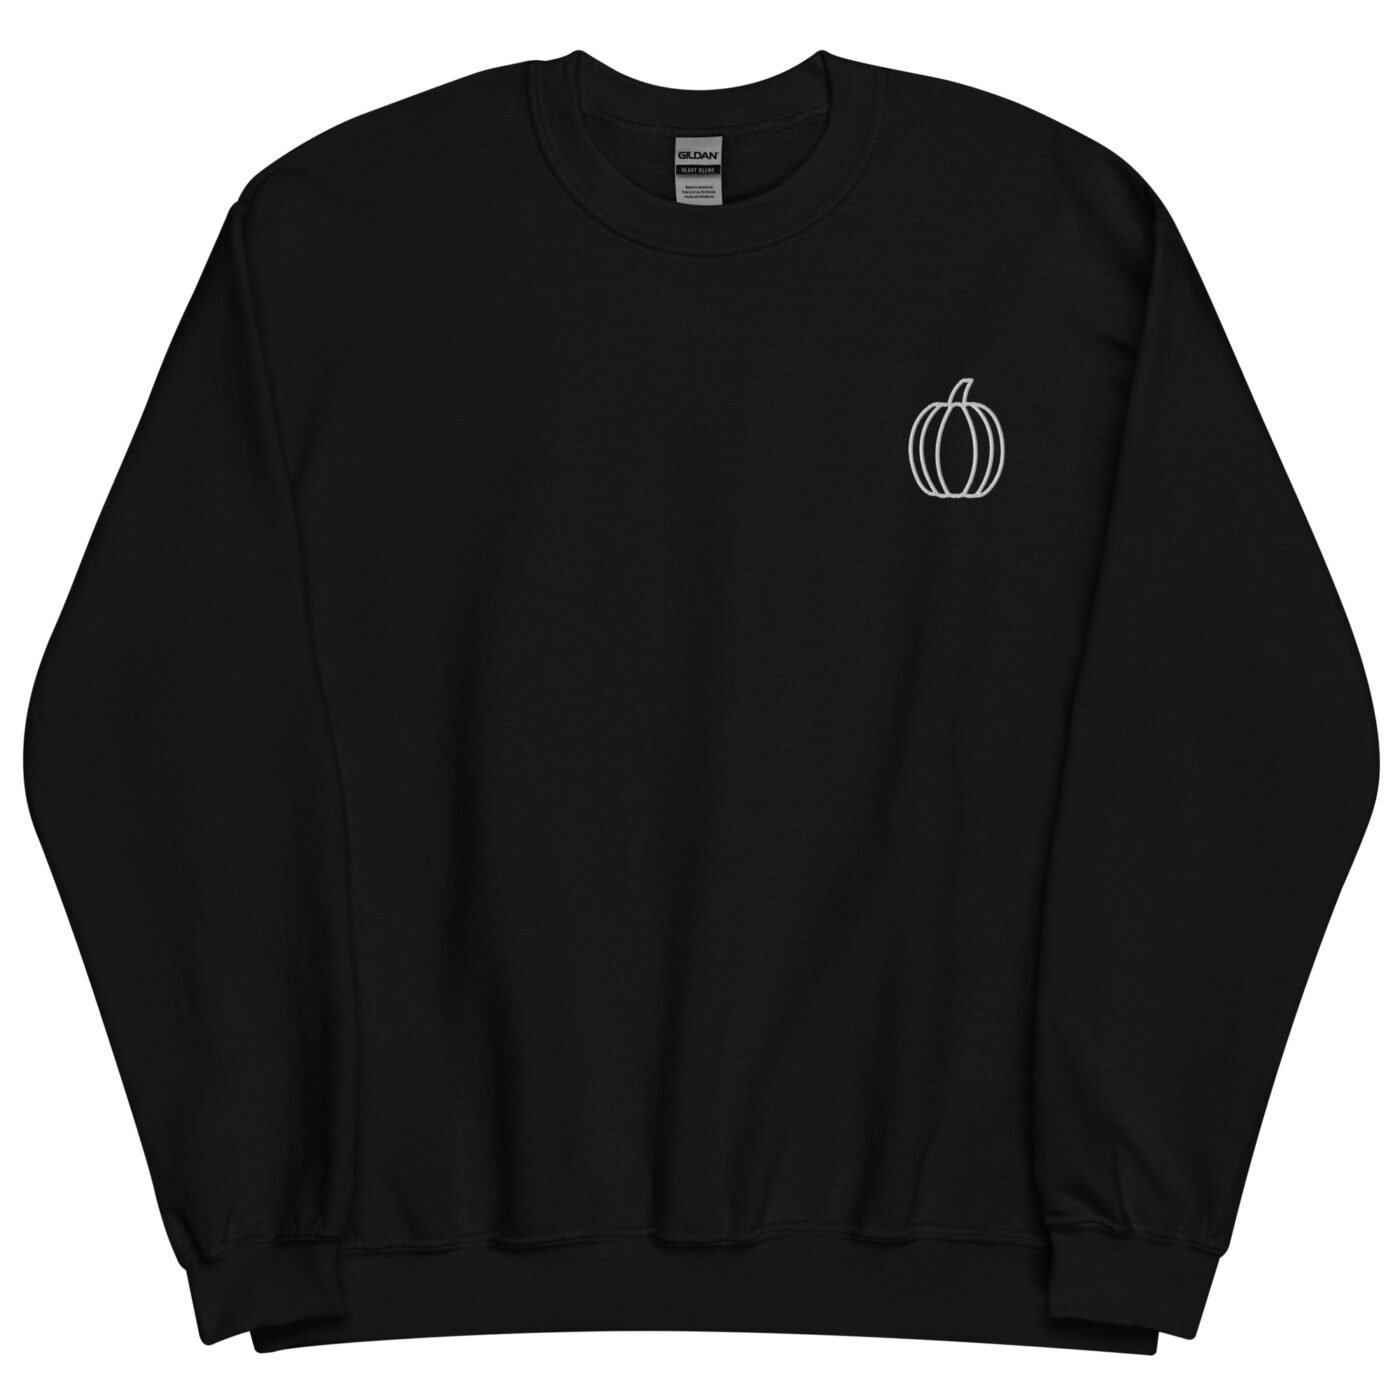 unisex crew neck sweatshirt black front 64877ceb33b5d 1.jpg